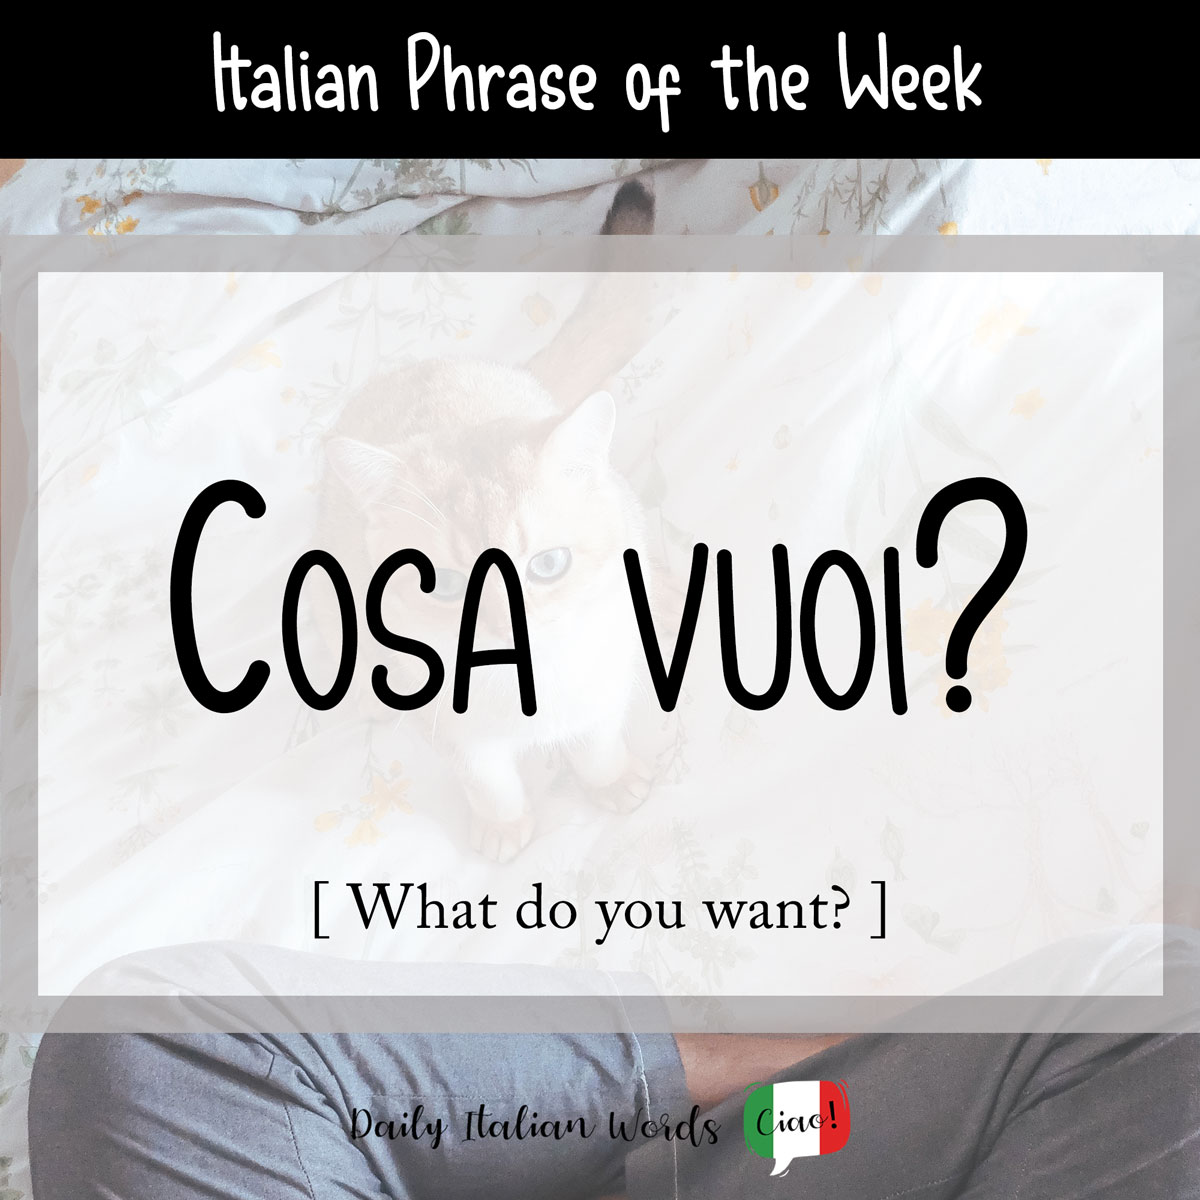 Italian Phrase: Cosa vuoi? (What would you like?)